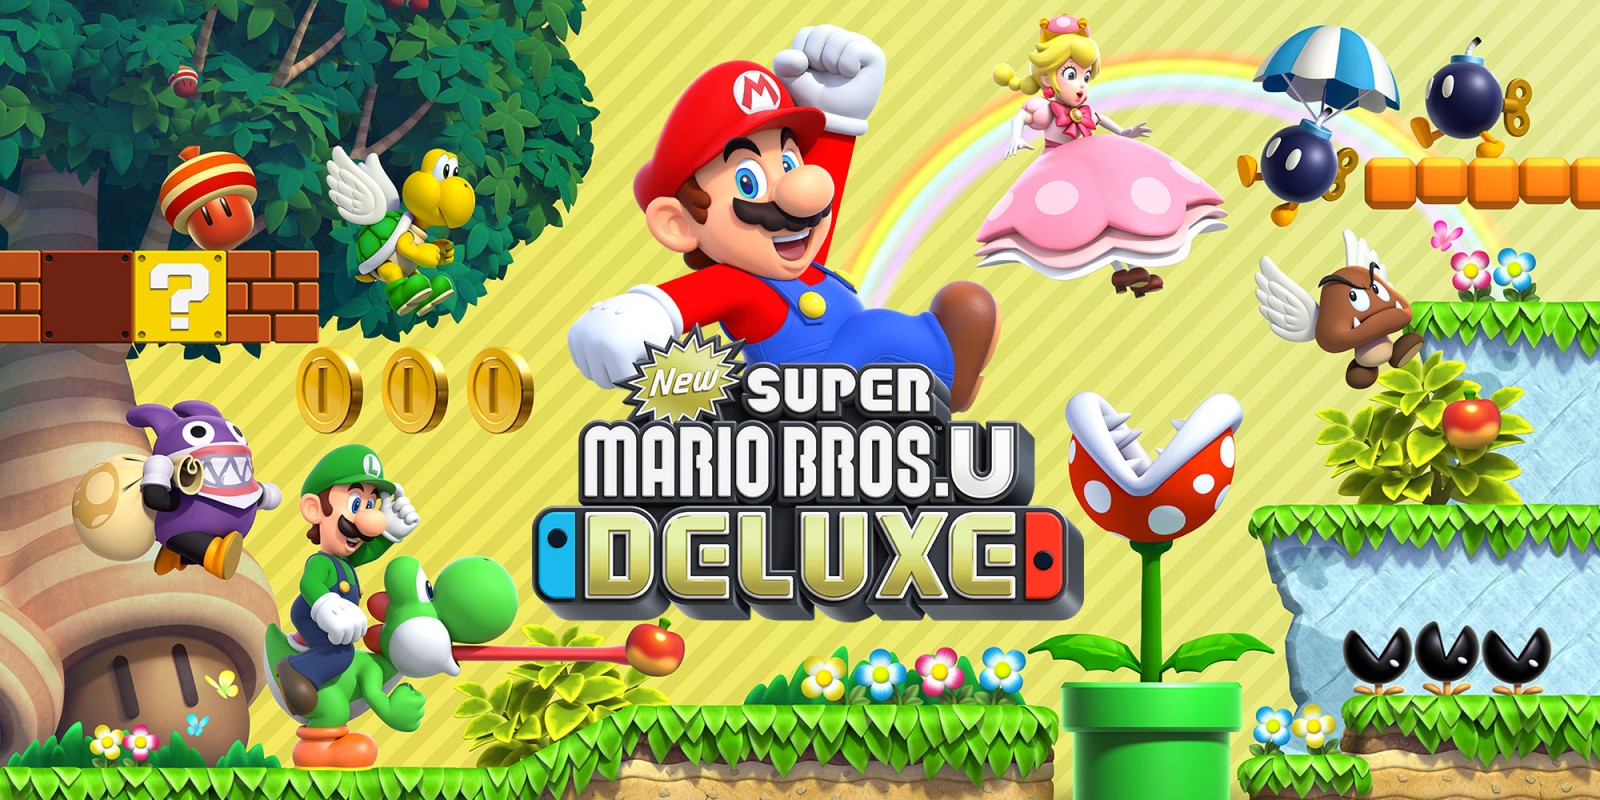 → Super Mario Run no Jogos Online Grátis